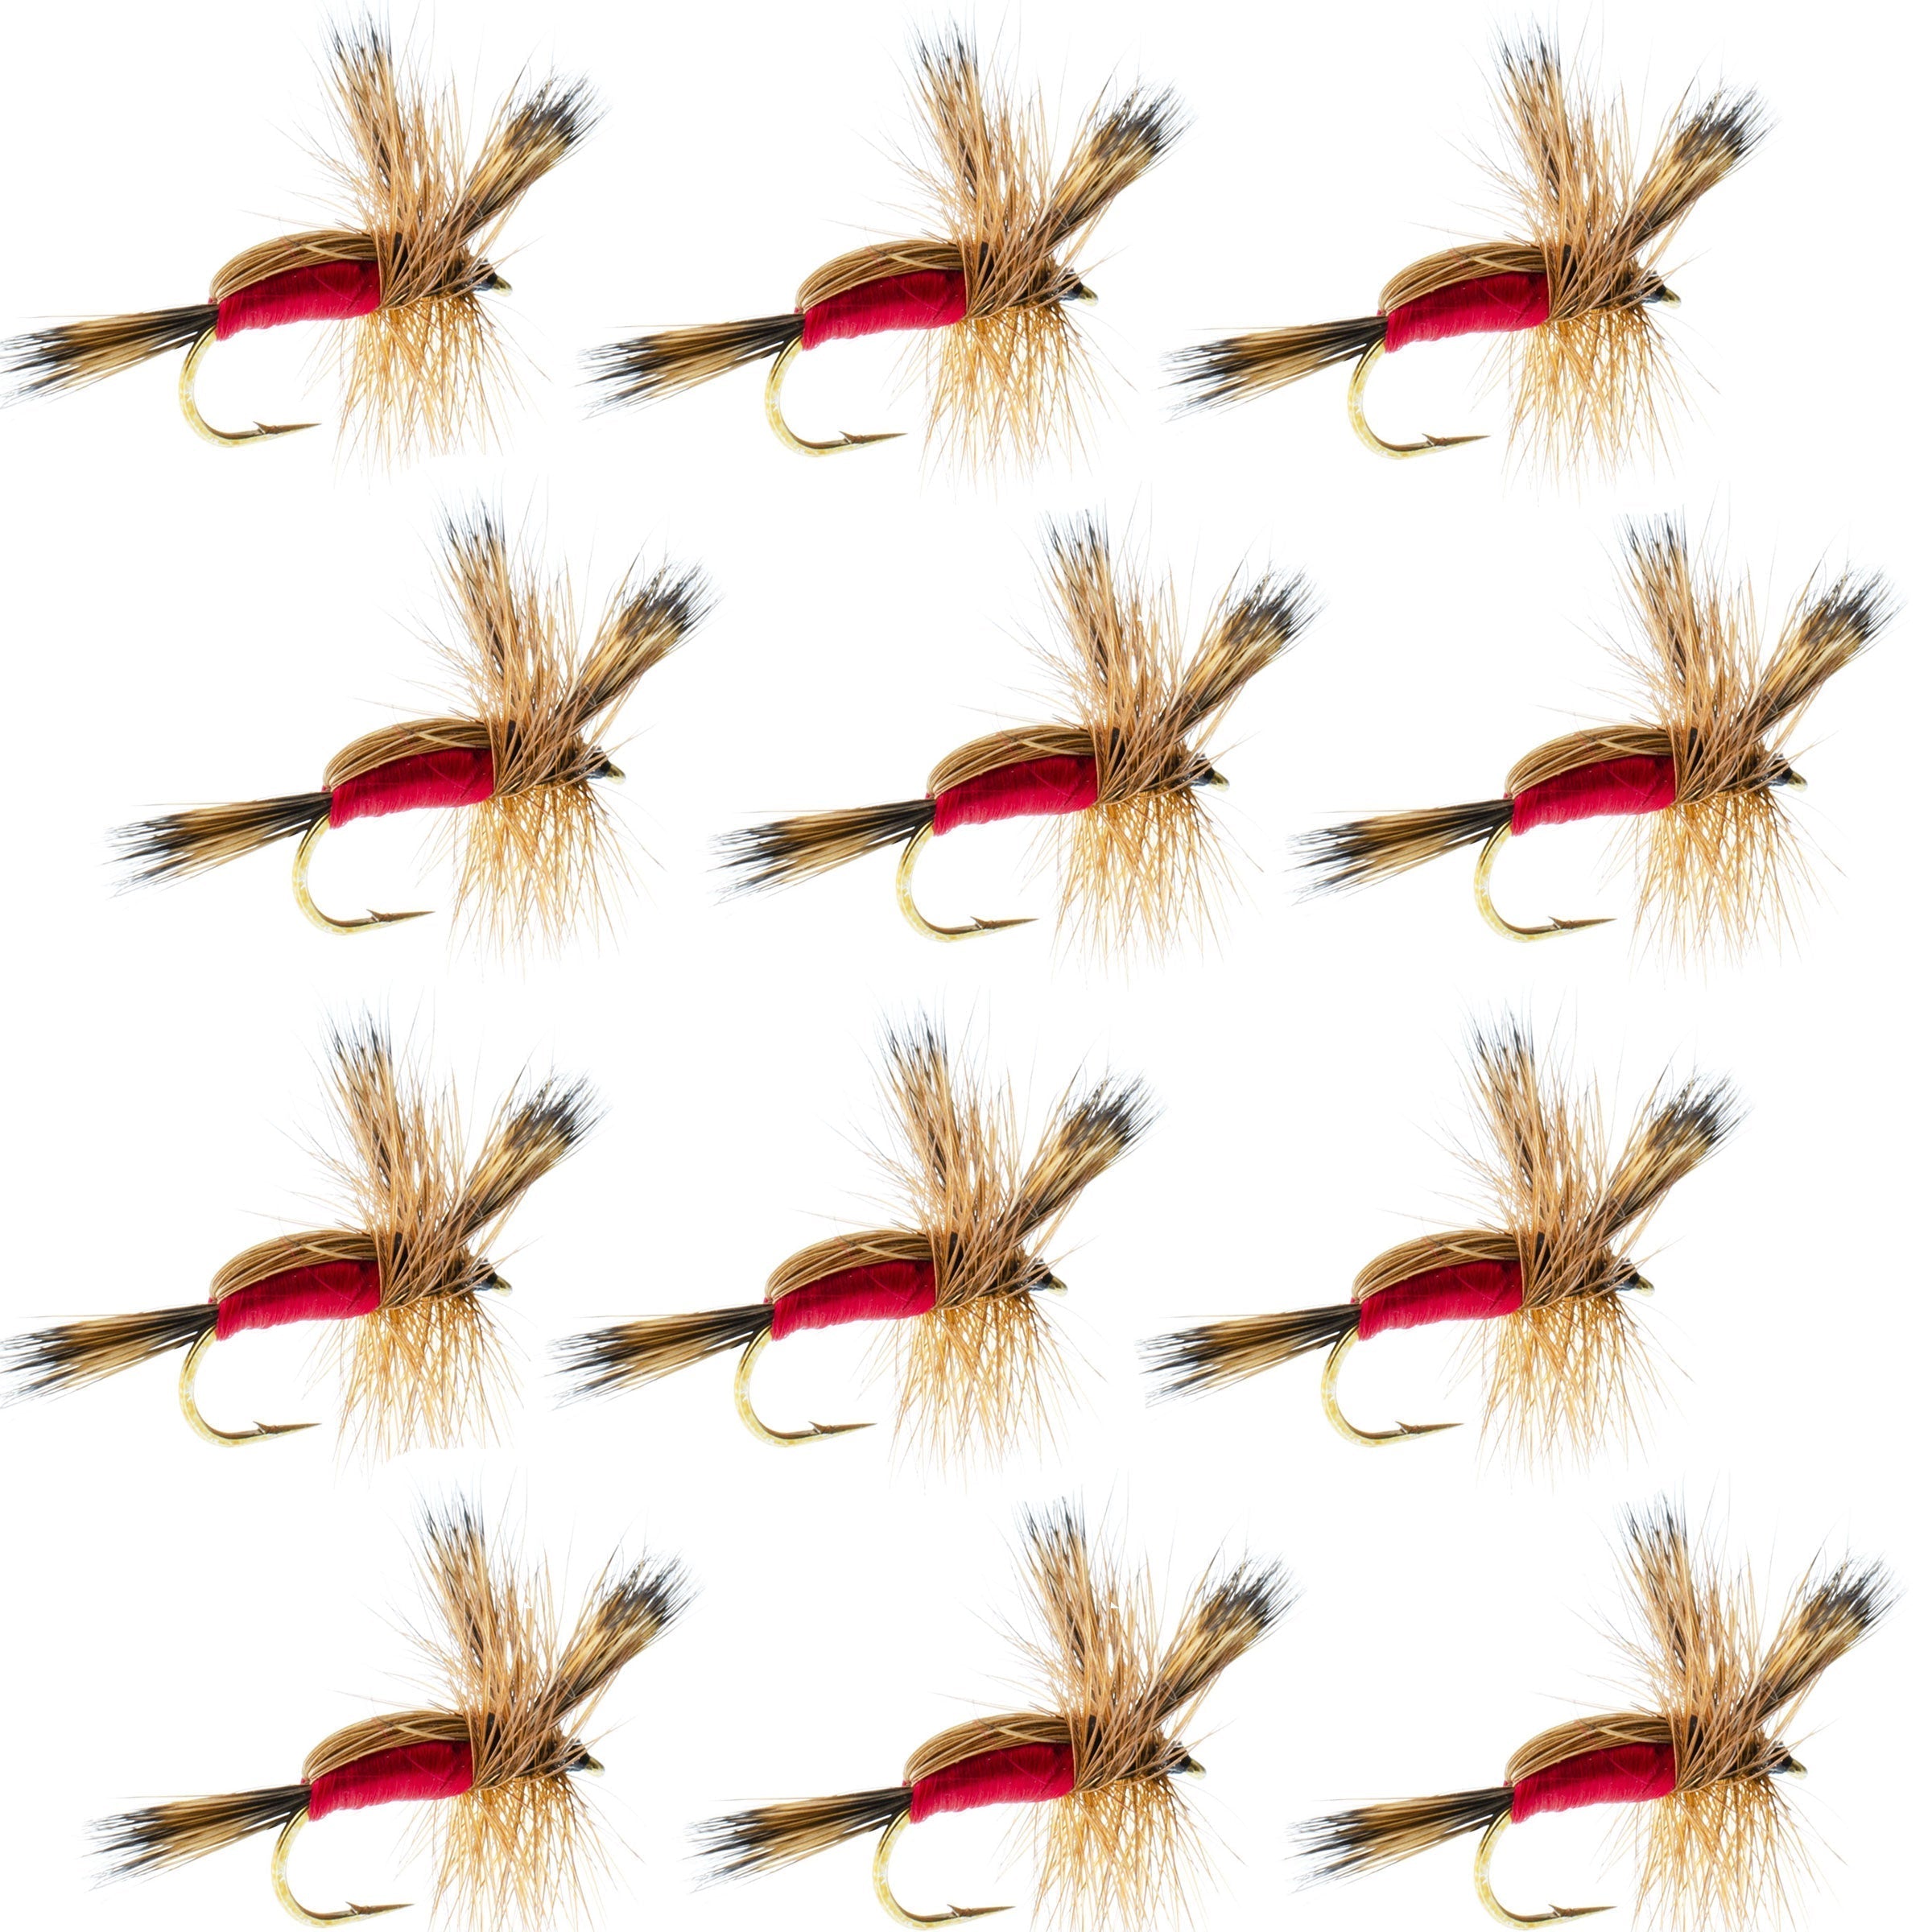 Red Humpy Classic Hair Wing Dry Fly - 1 docena de anzuelos para moscas, tamaño 16